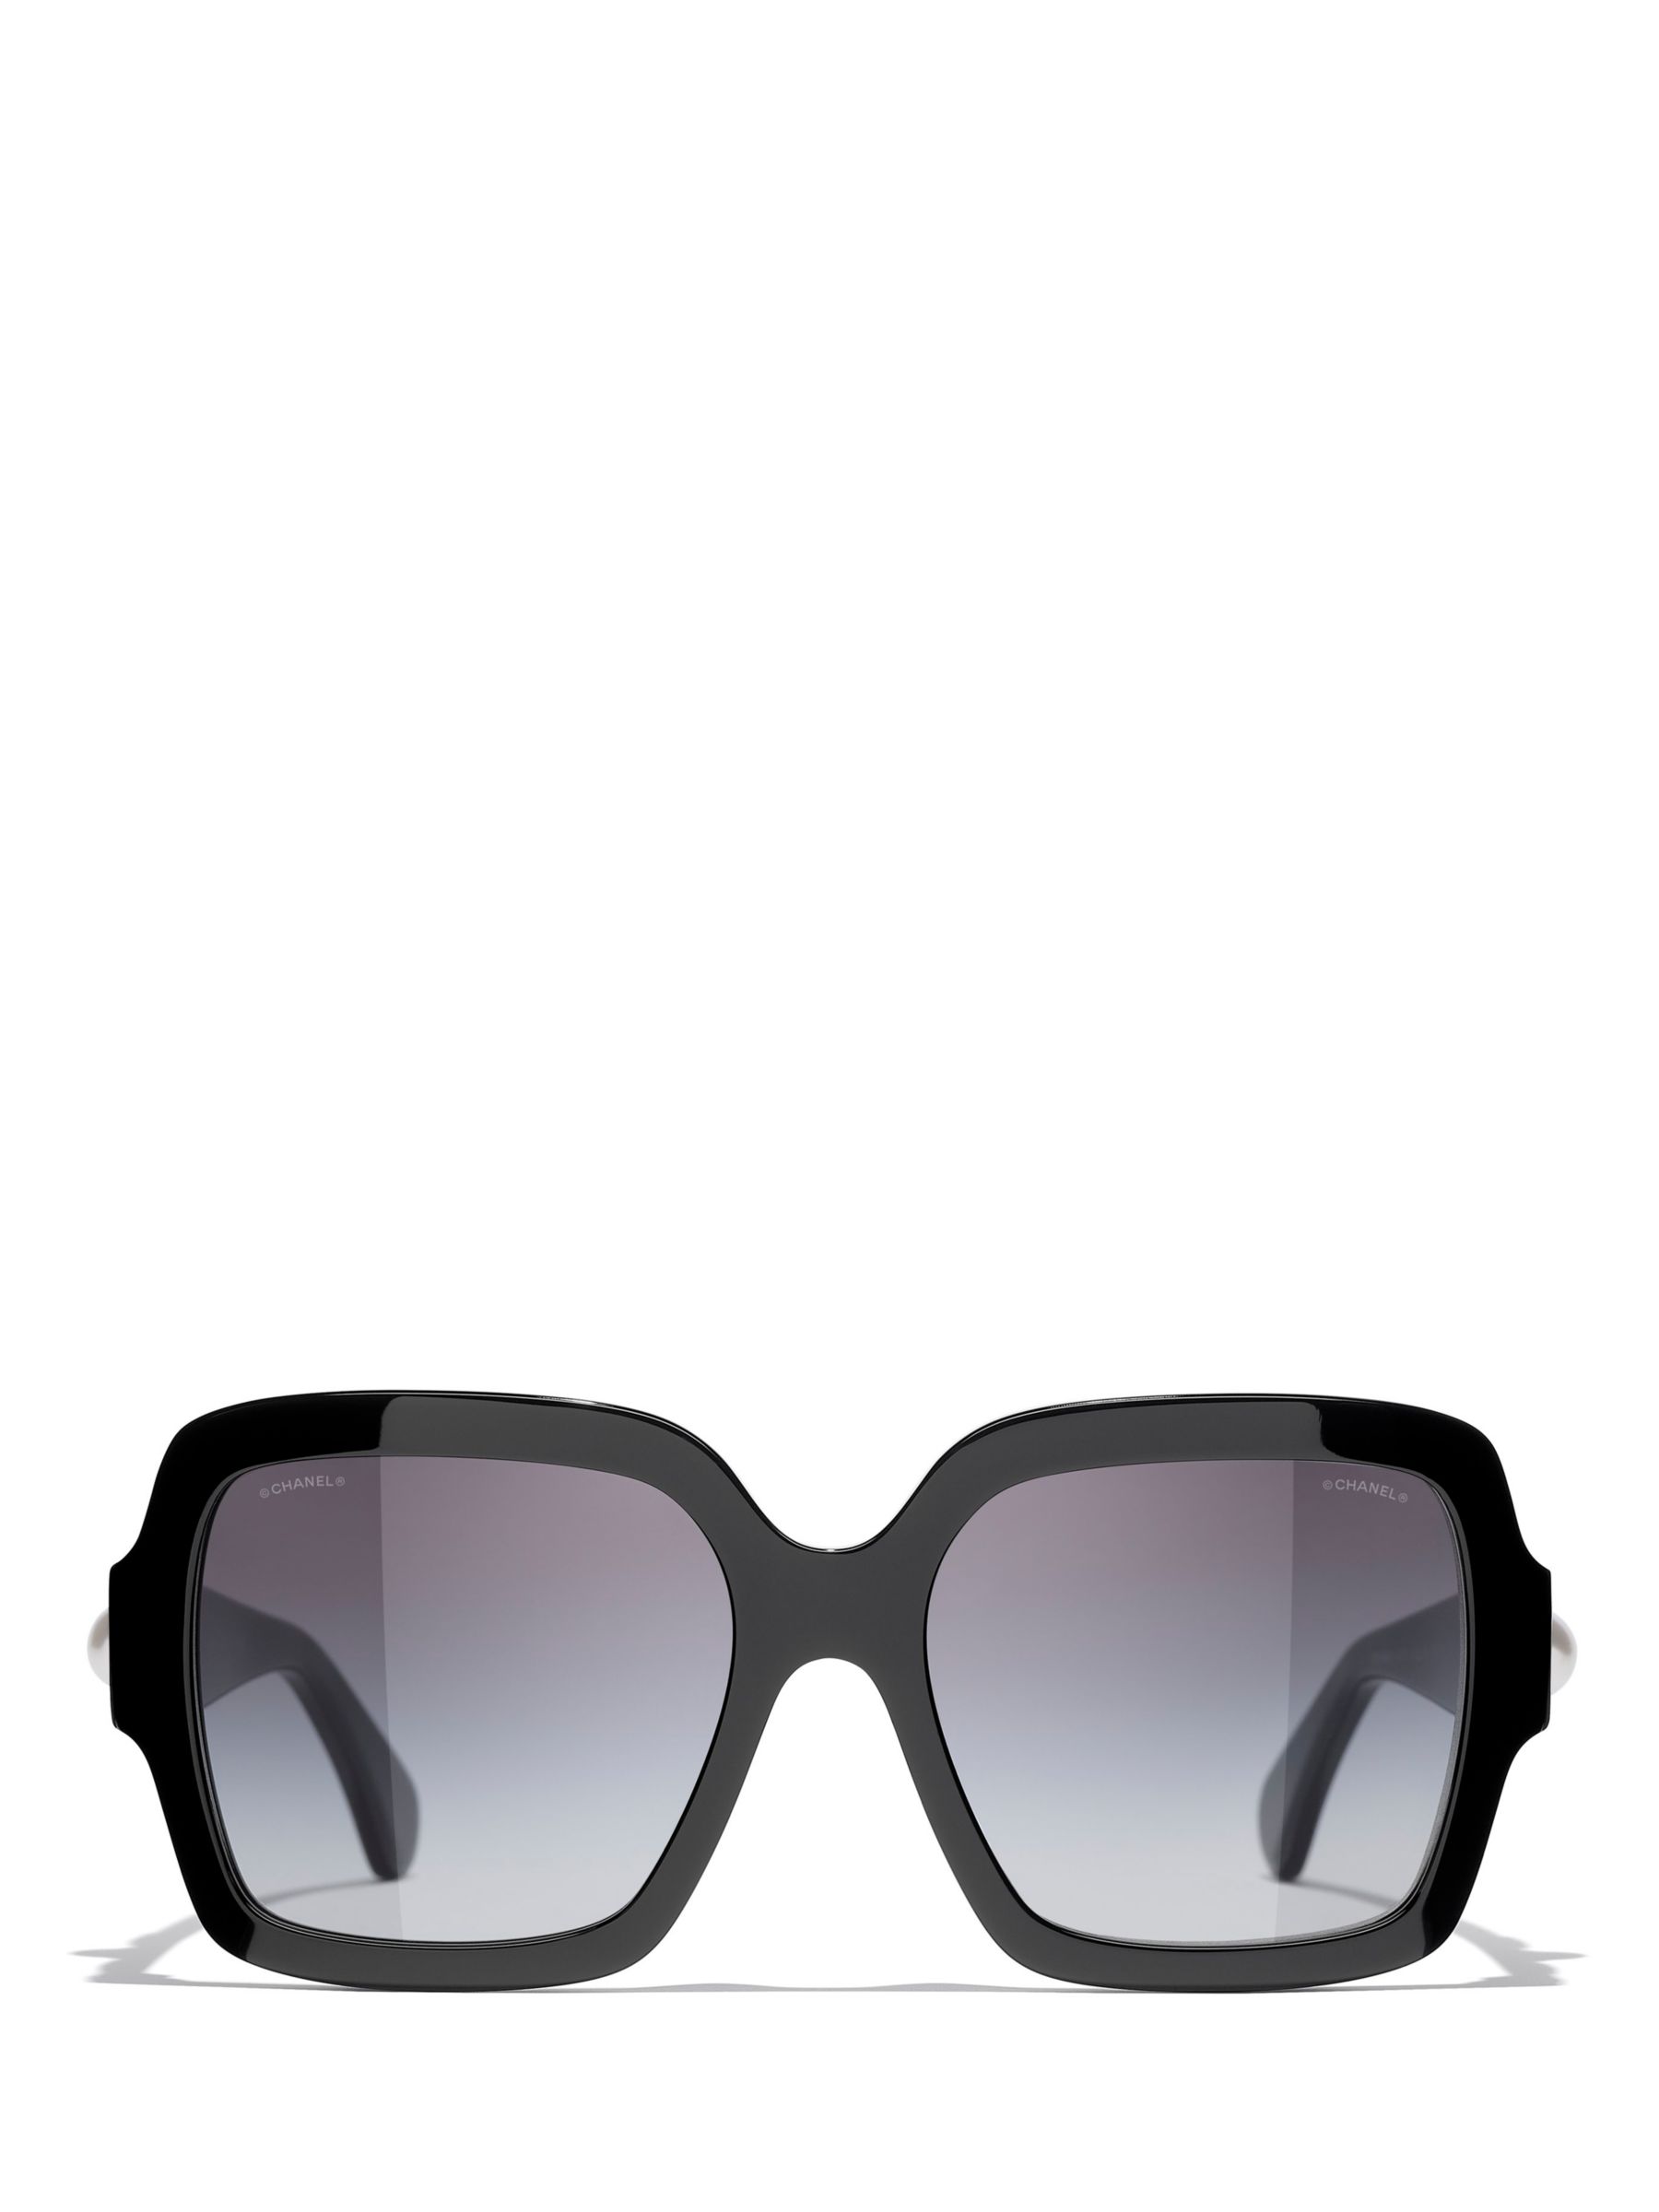 CHANEL CH5479 Women's Square Sunglasses, Black/Grey at John Lewis ...